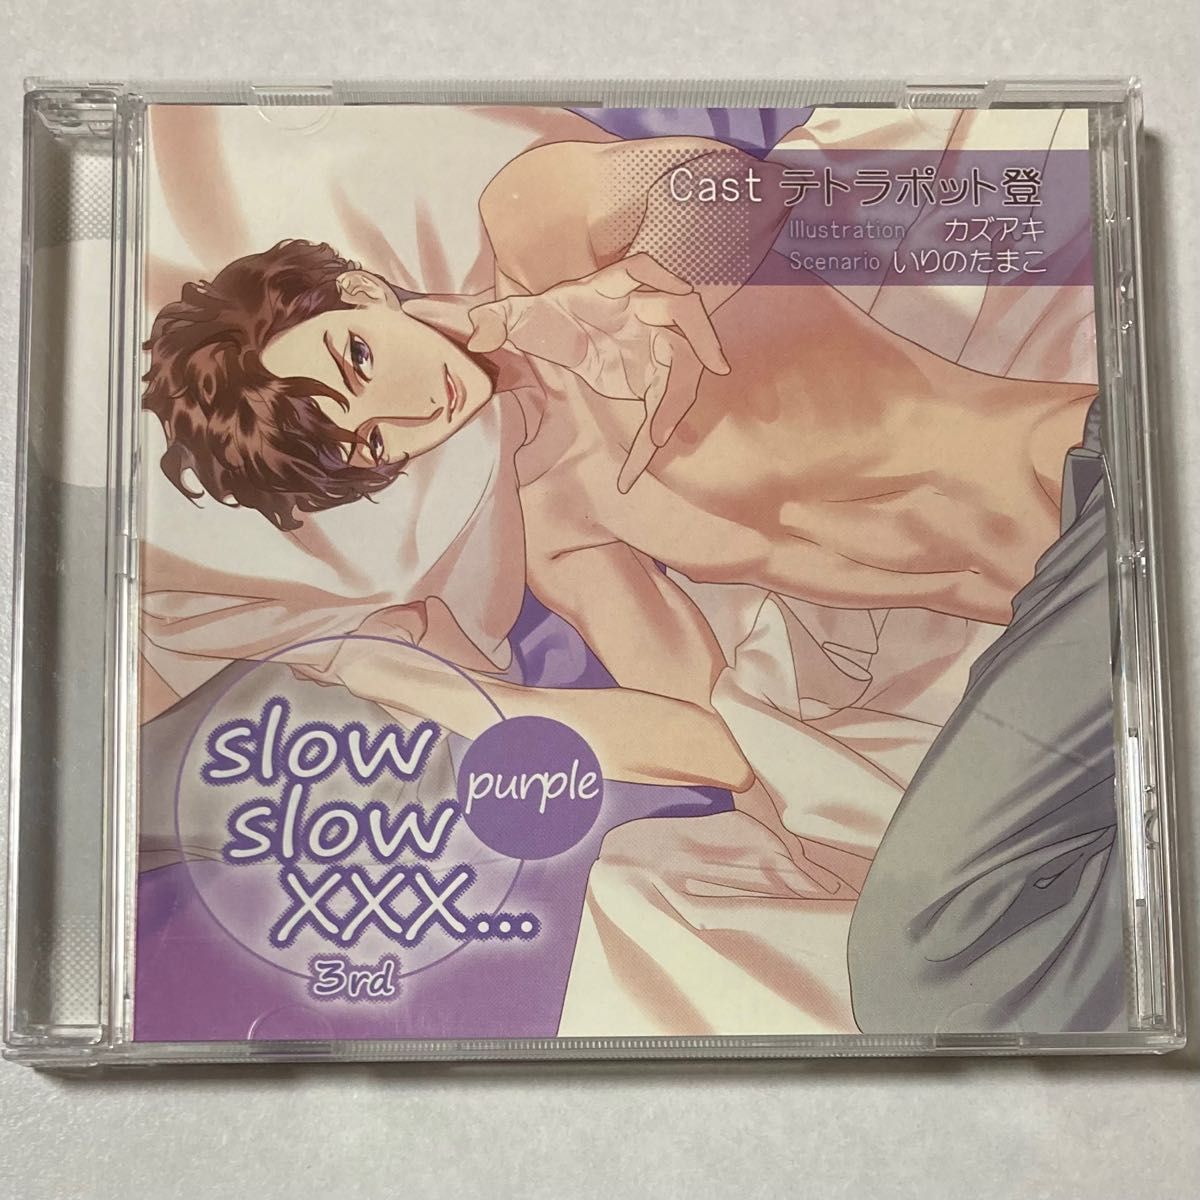 slow slow xxx... 3rd テトラポット登